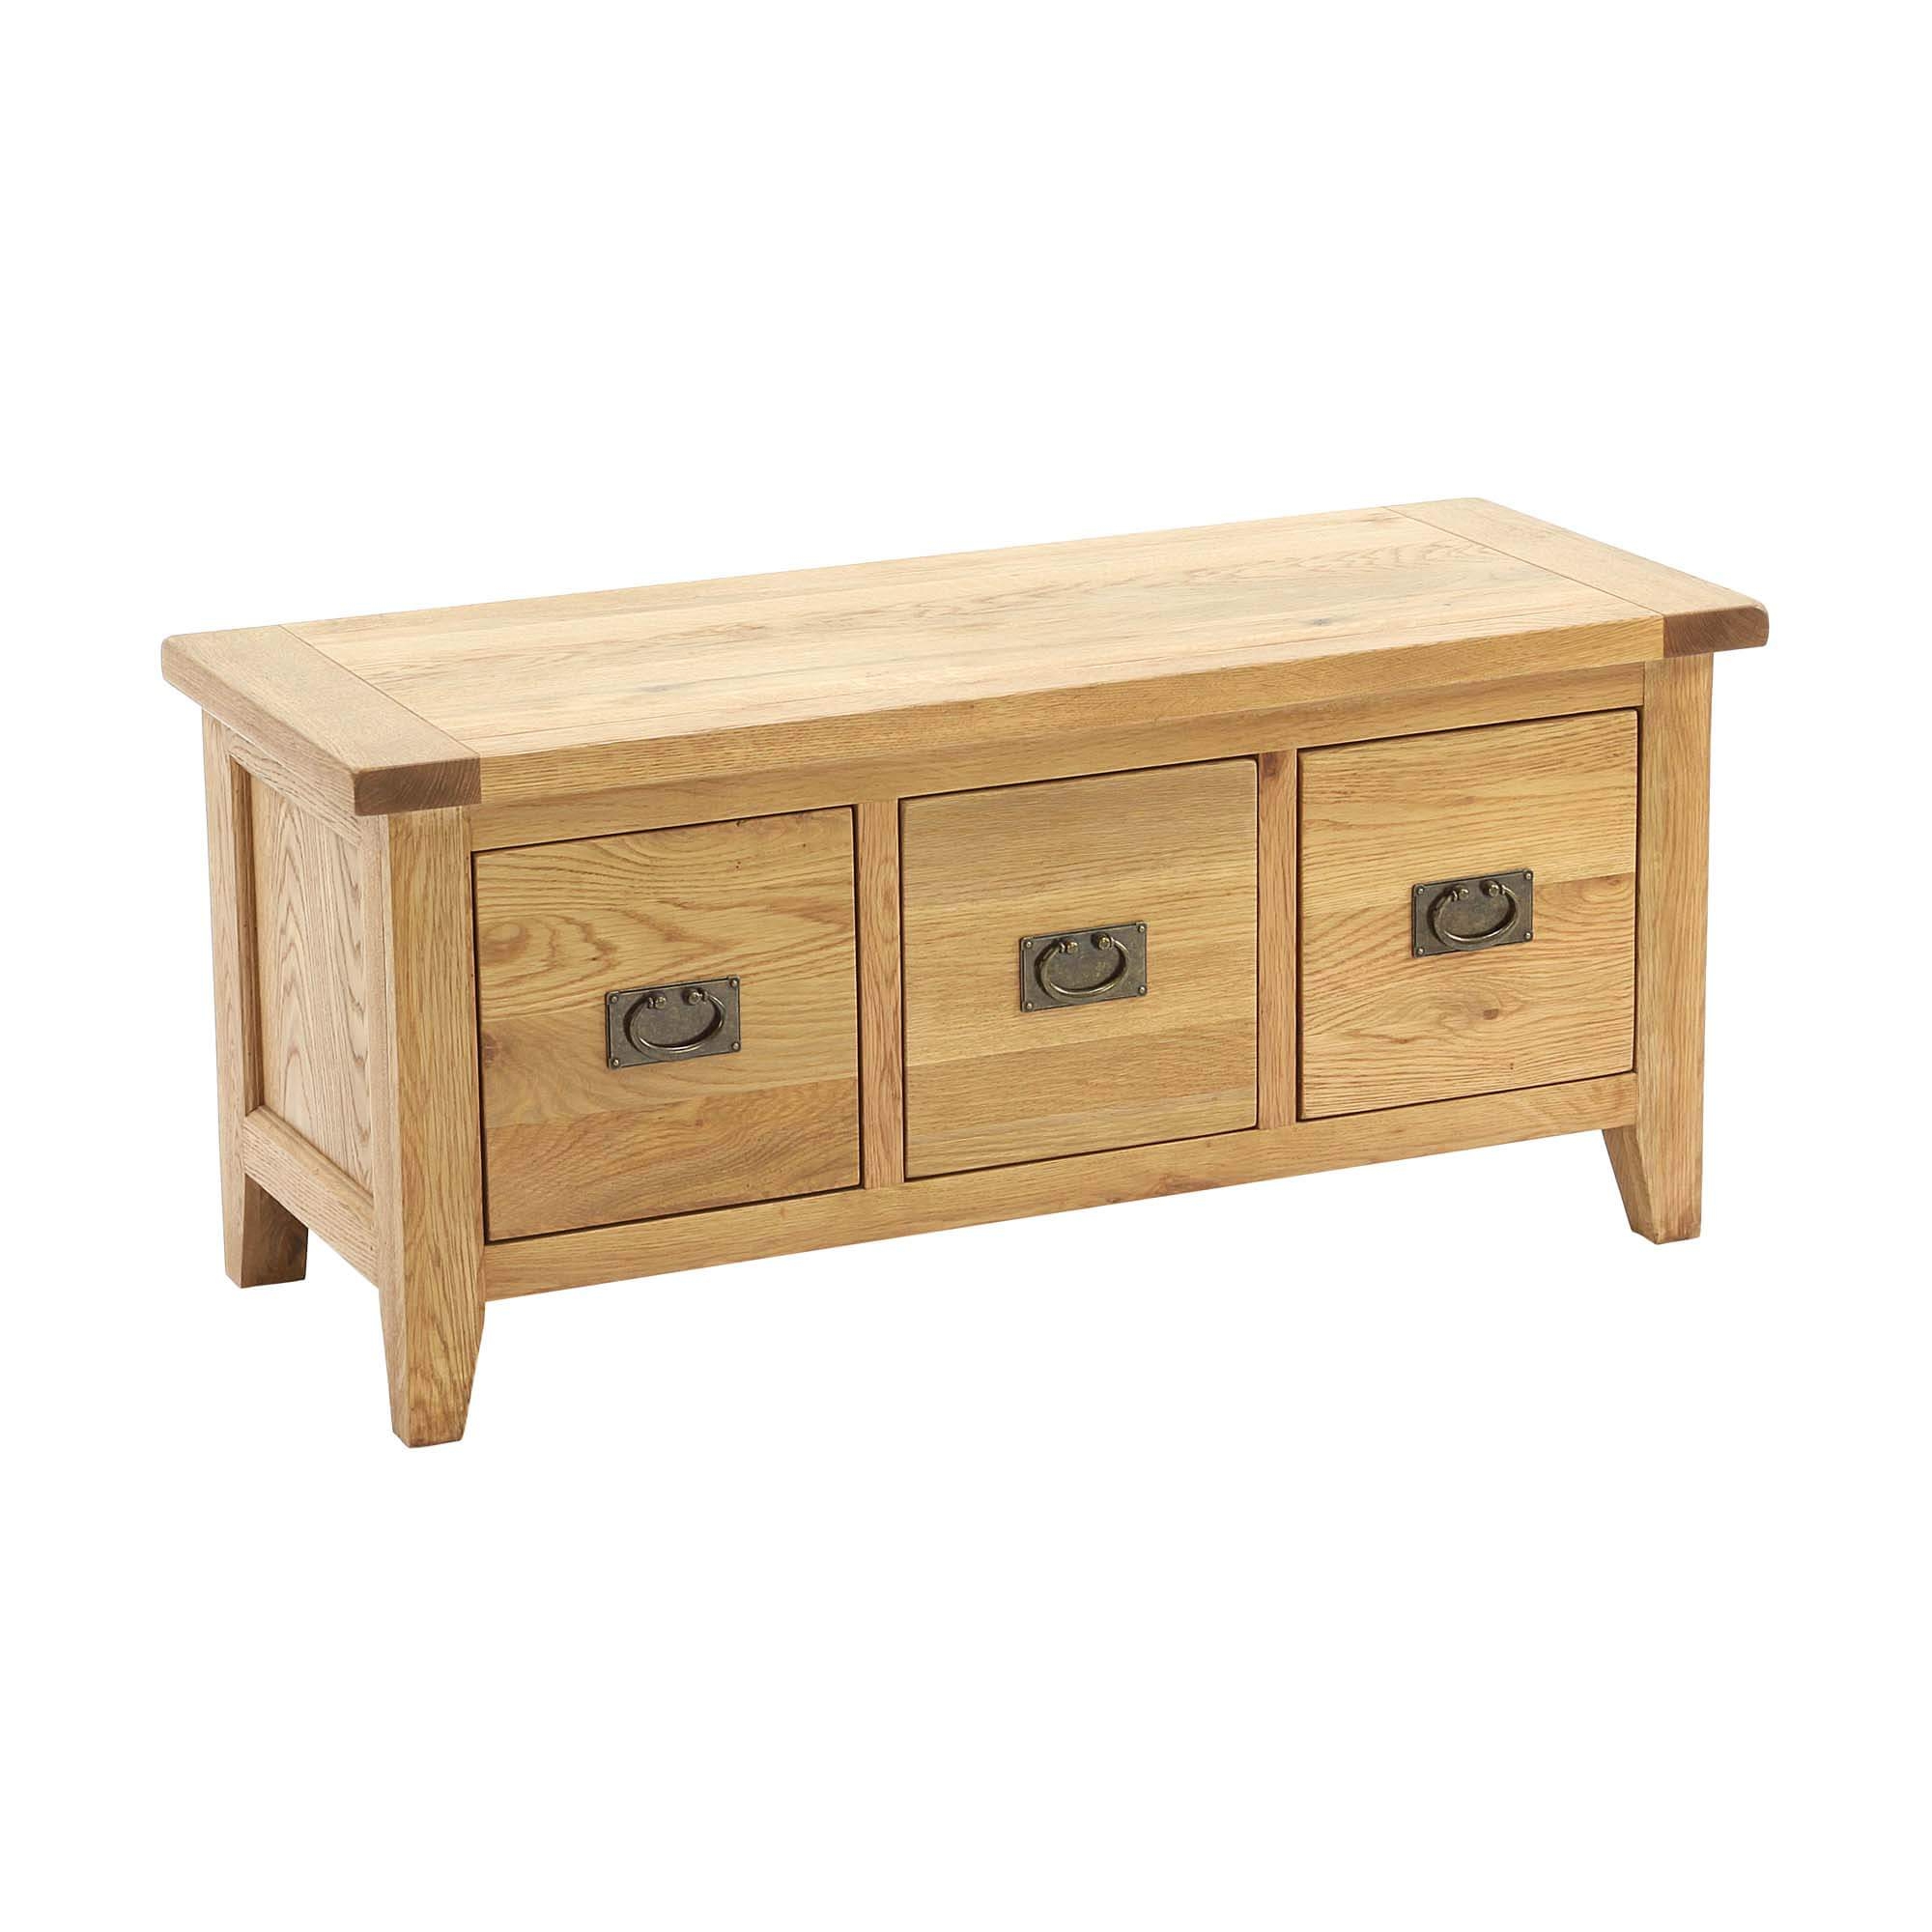 Vancouver oak furniture vancouver petite oak storage bench with